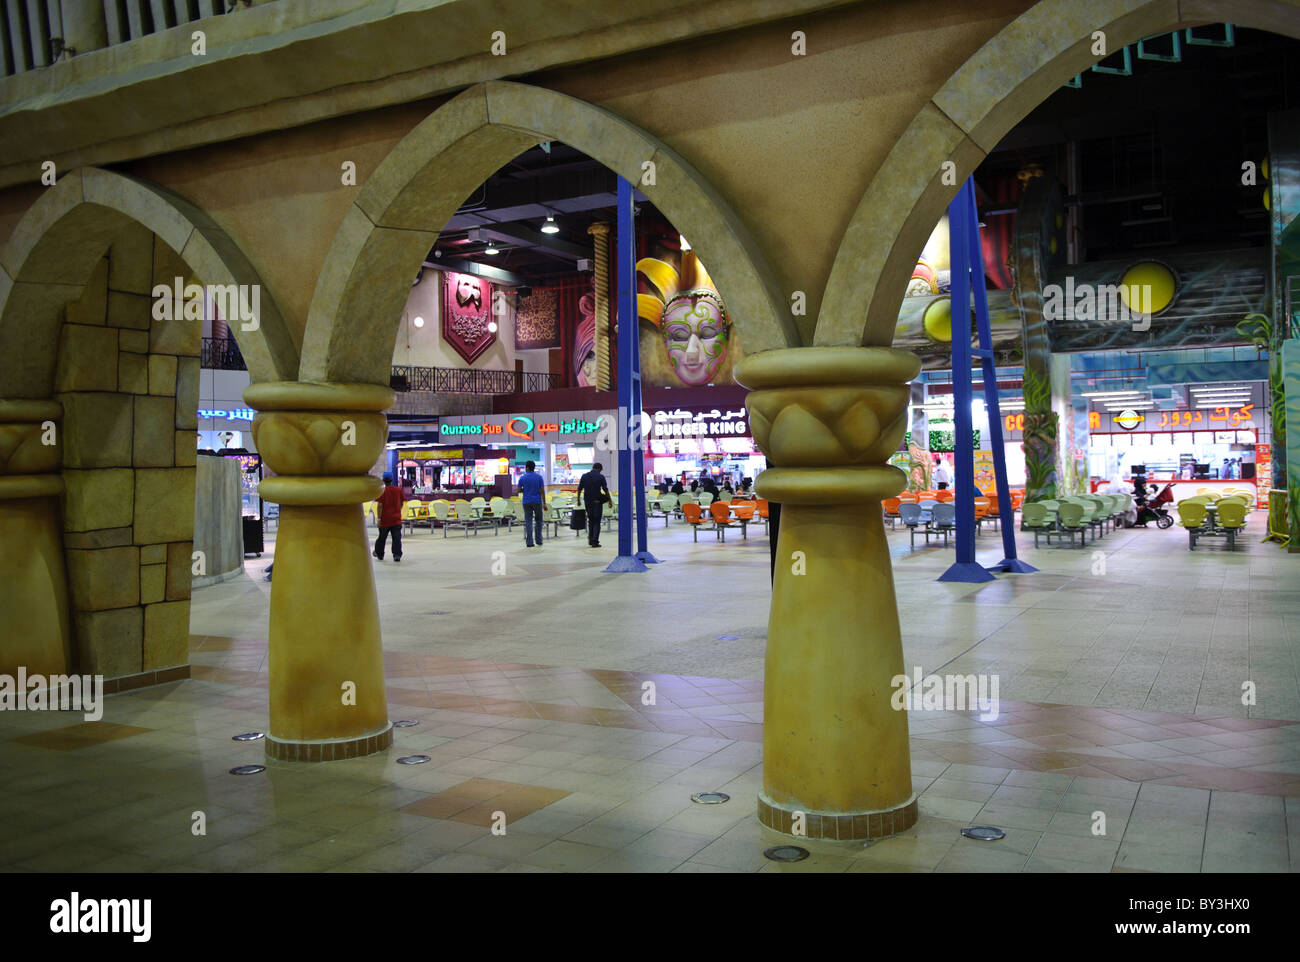 Villaggio Shopping Mall in Doha, Qatar resembling the city of Venice in Italy Stock Photo